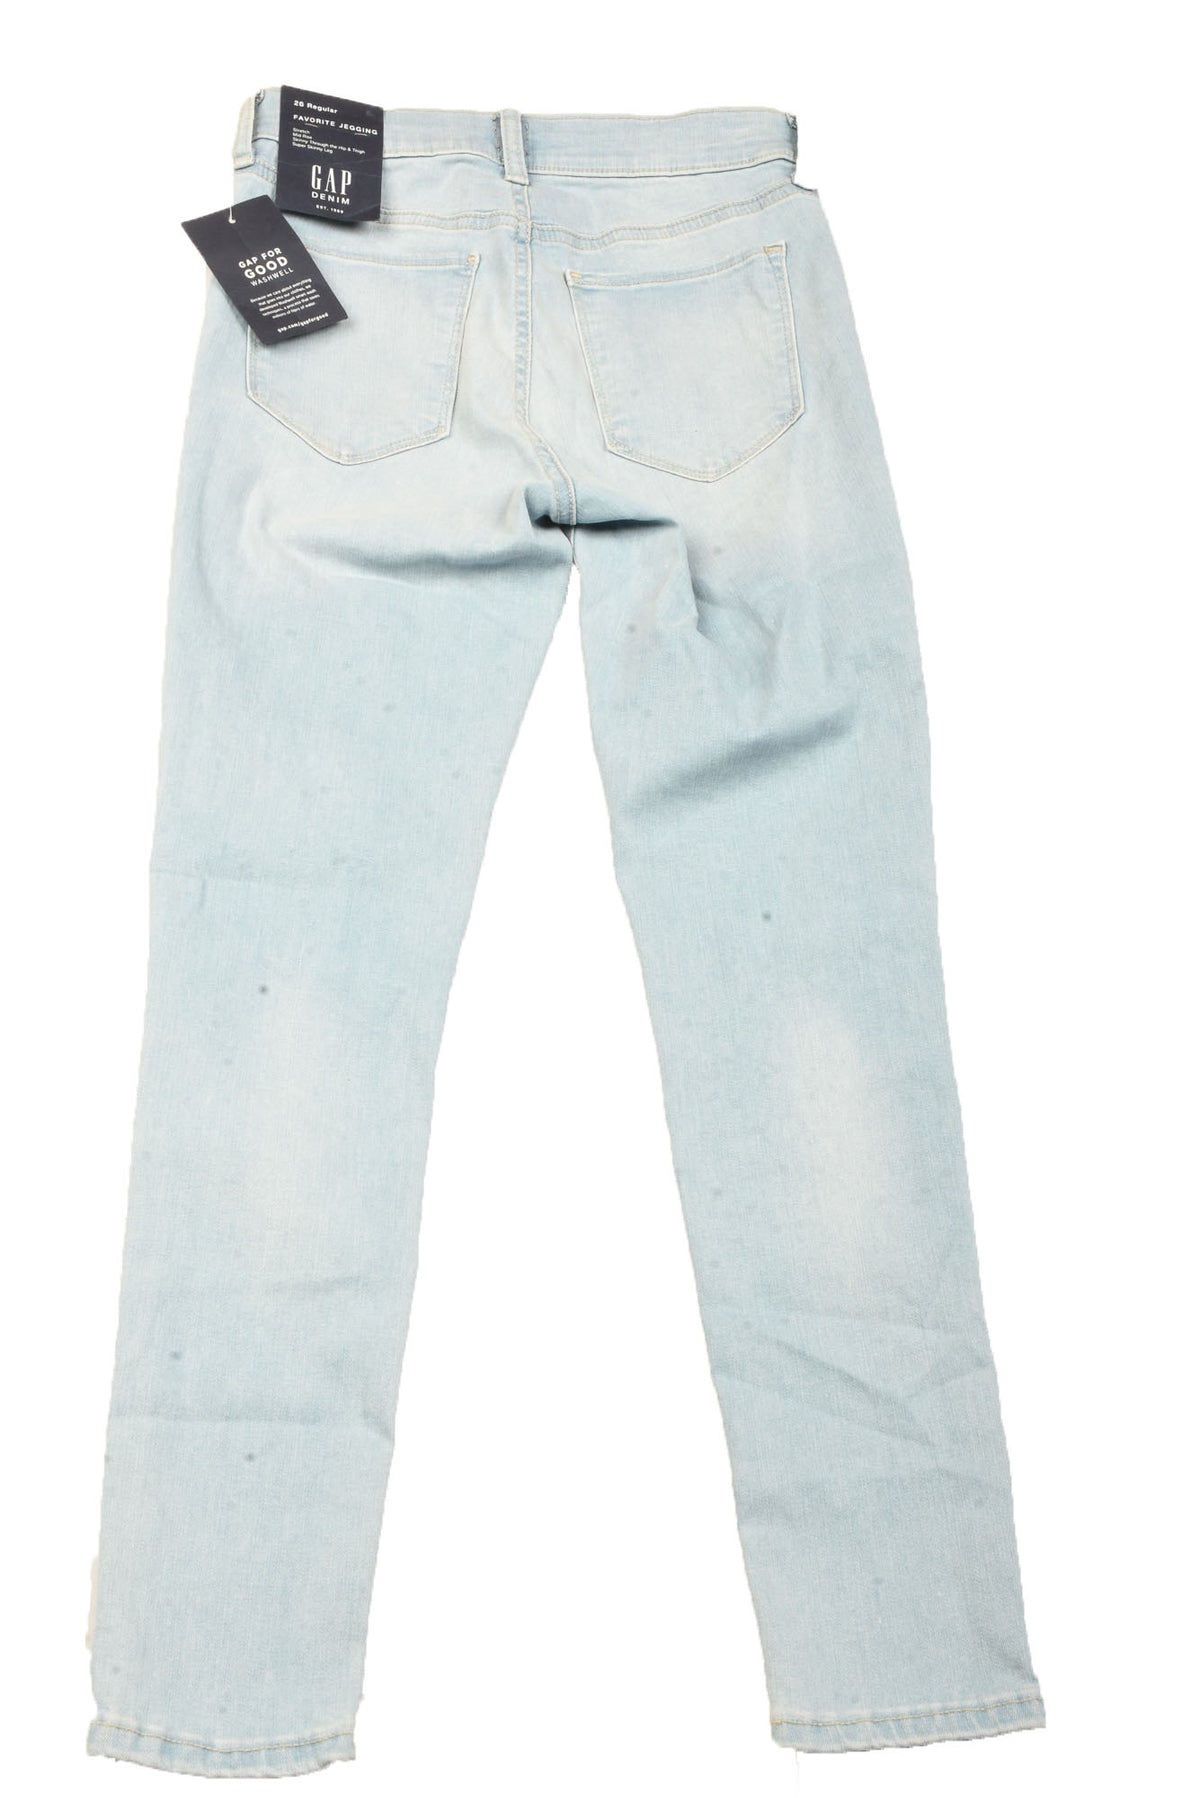 Gap Denim Size 26 Regular Women&#39;s Jeans